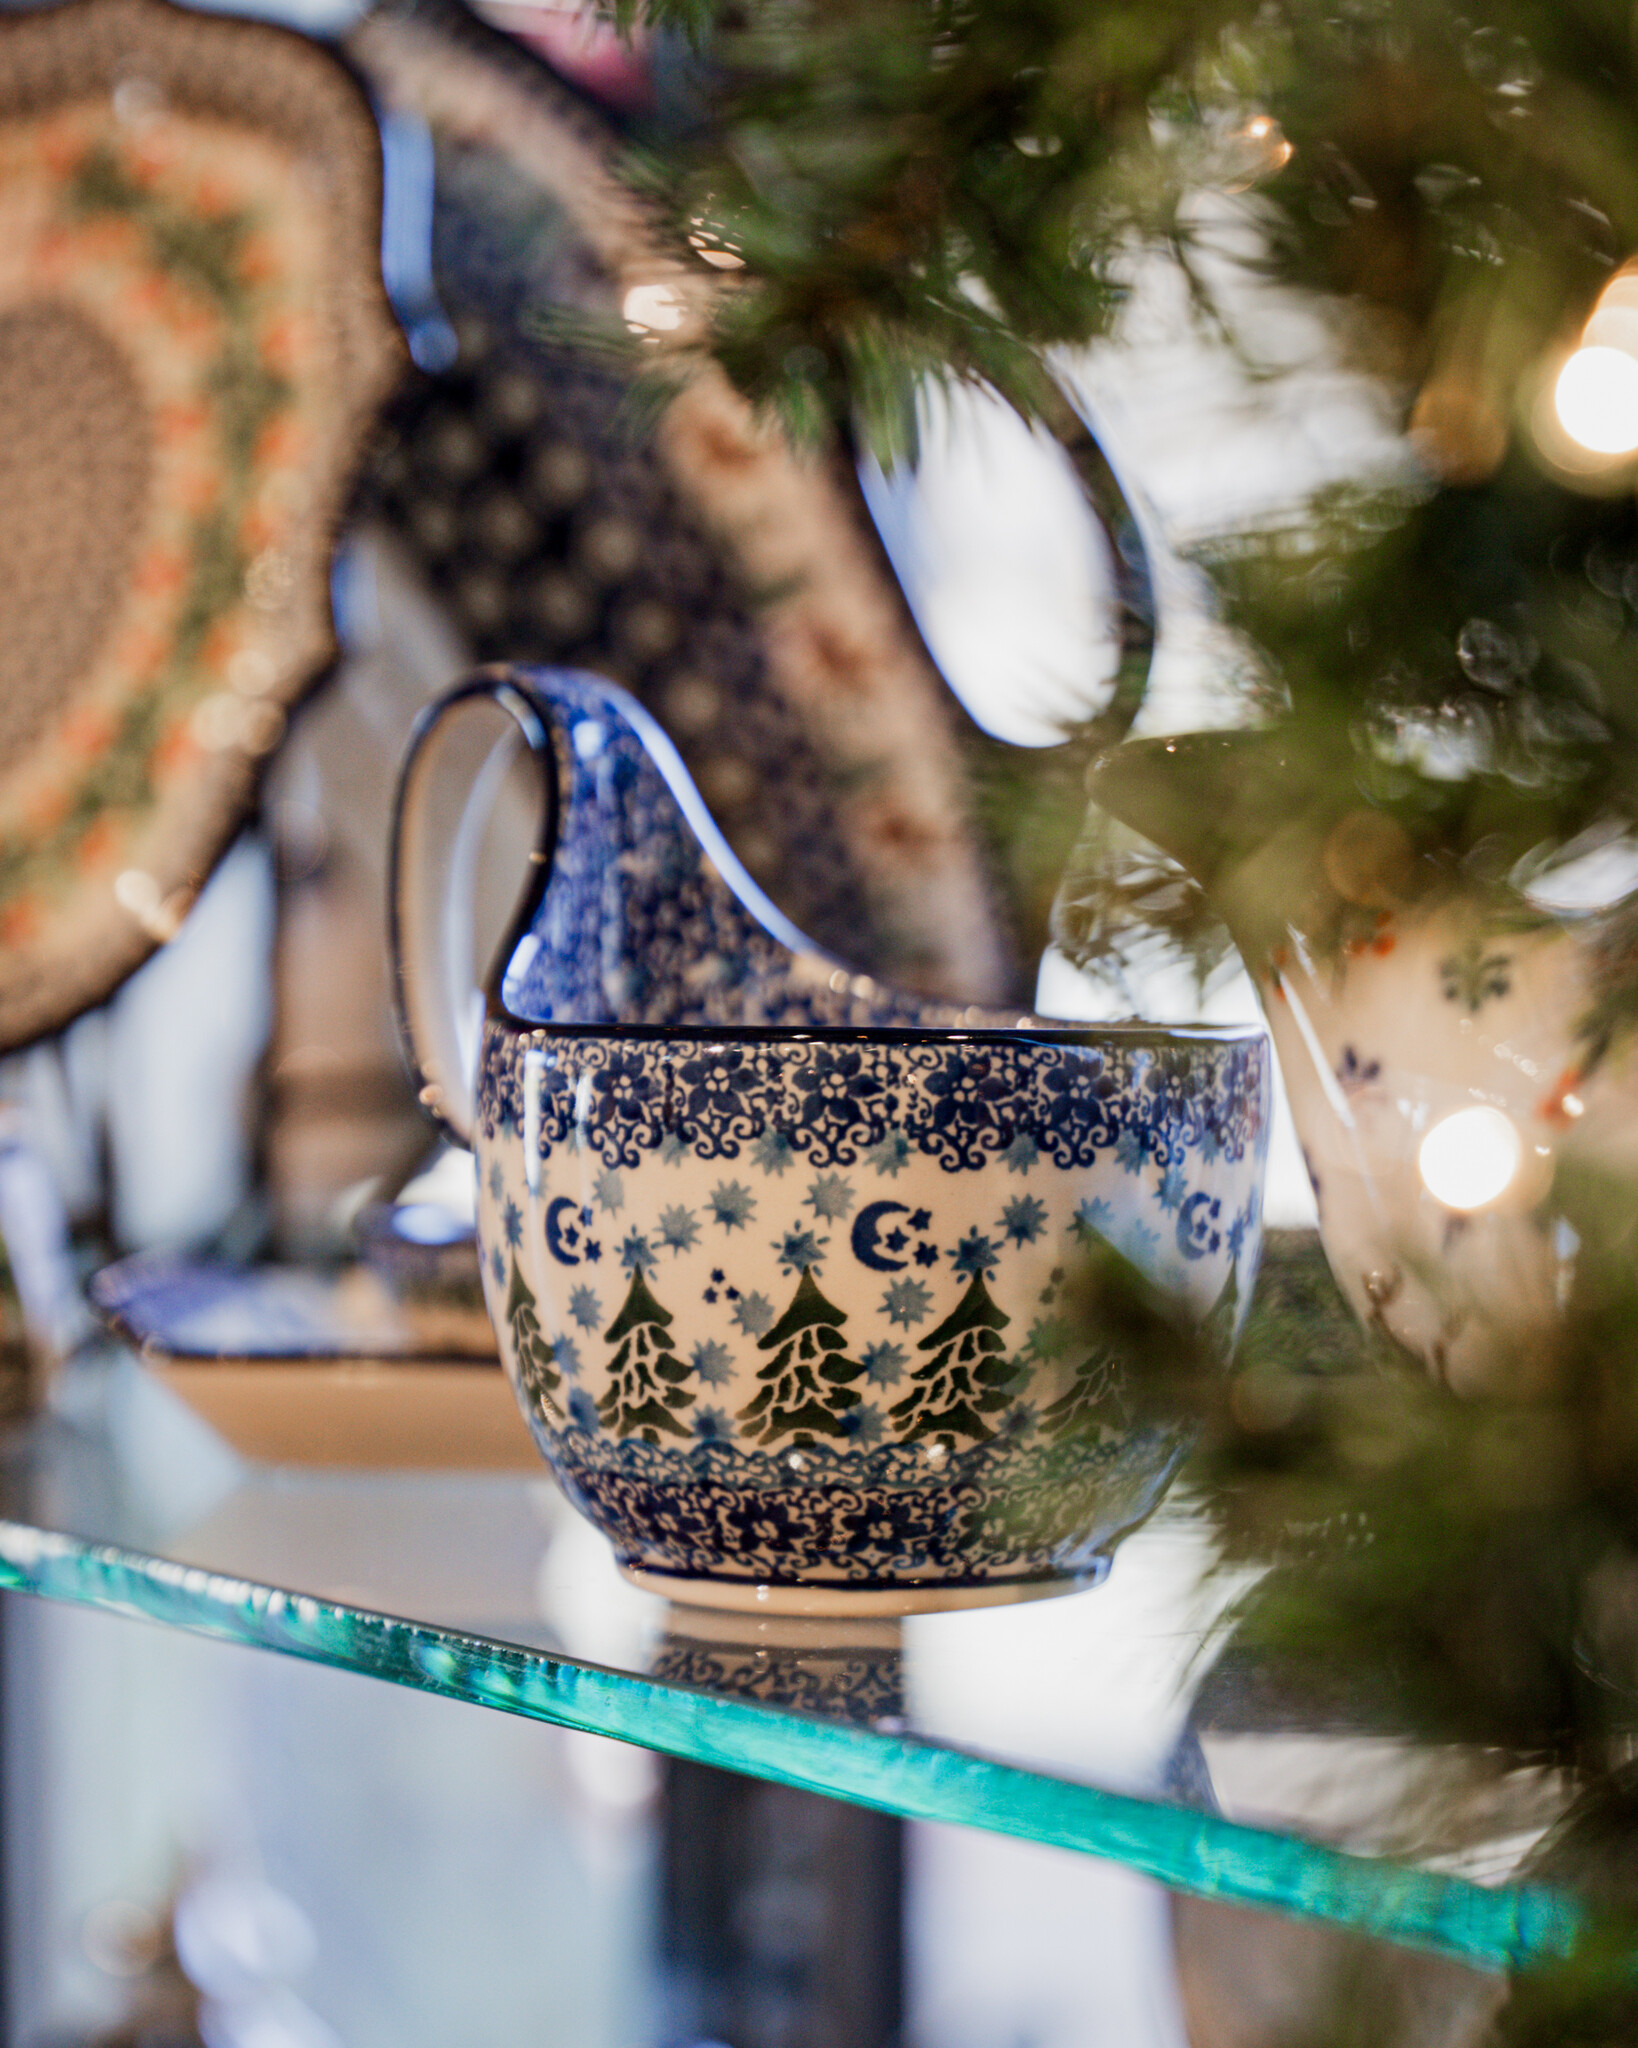 Festive Polish Pottery Patterns: Celebrating the Holiday Spirit